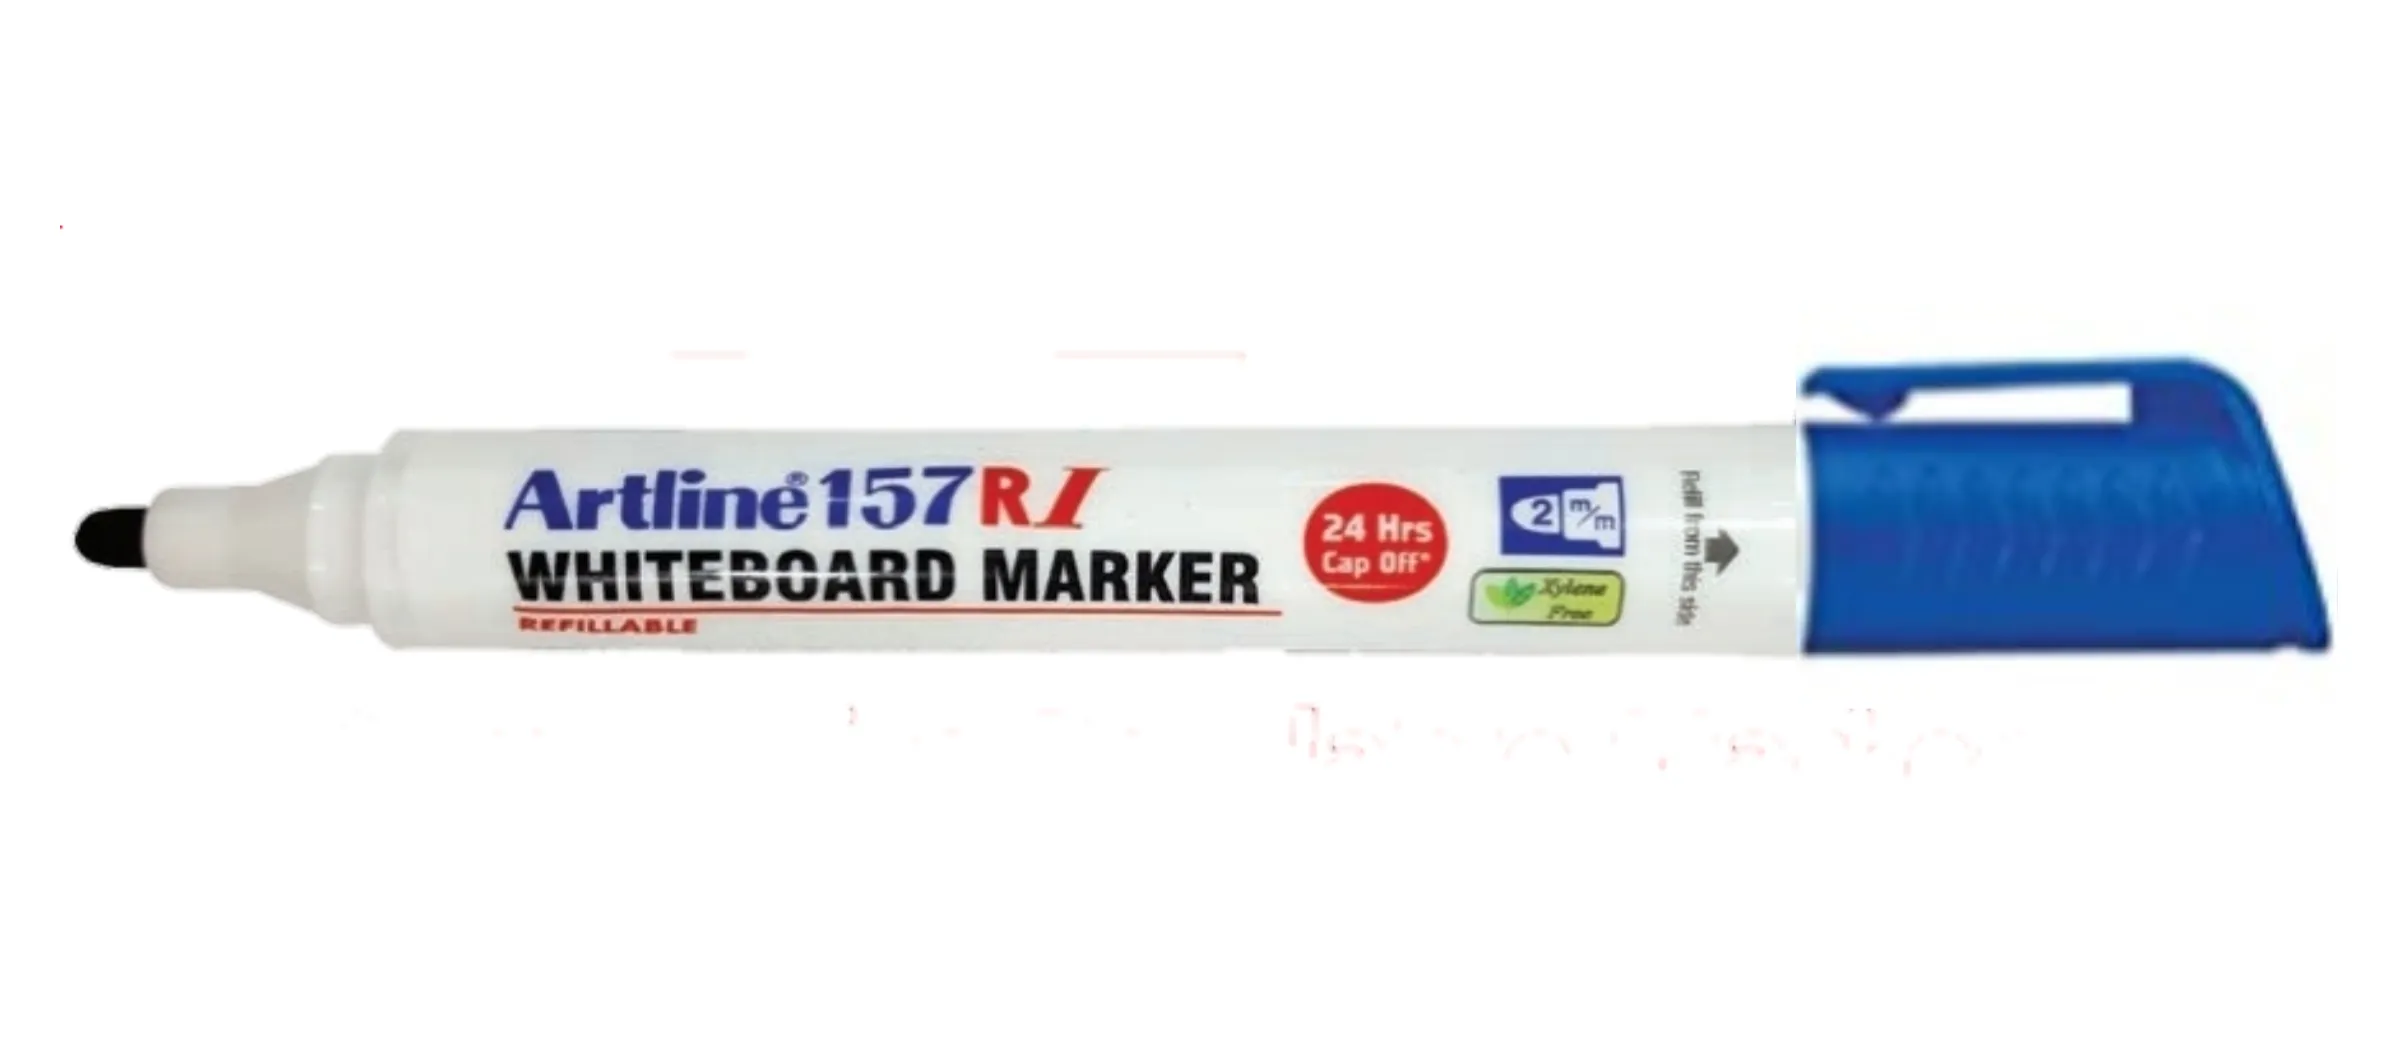 Artline White Board Marker 157 RI Refillable Blue Colour Pack of 1 Marker